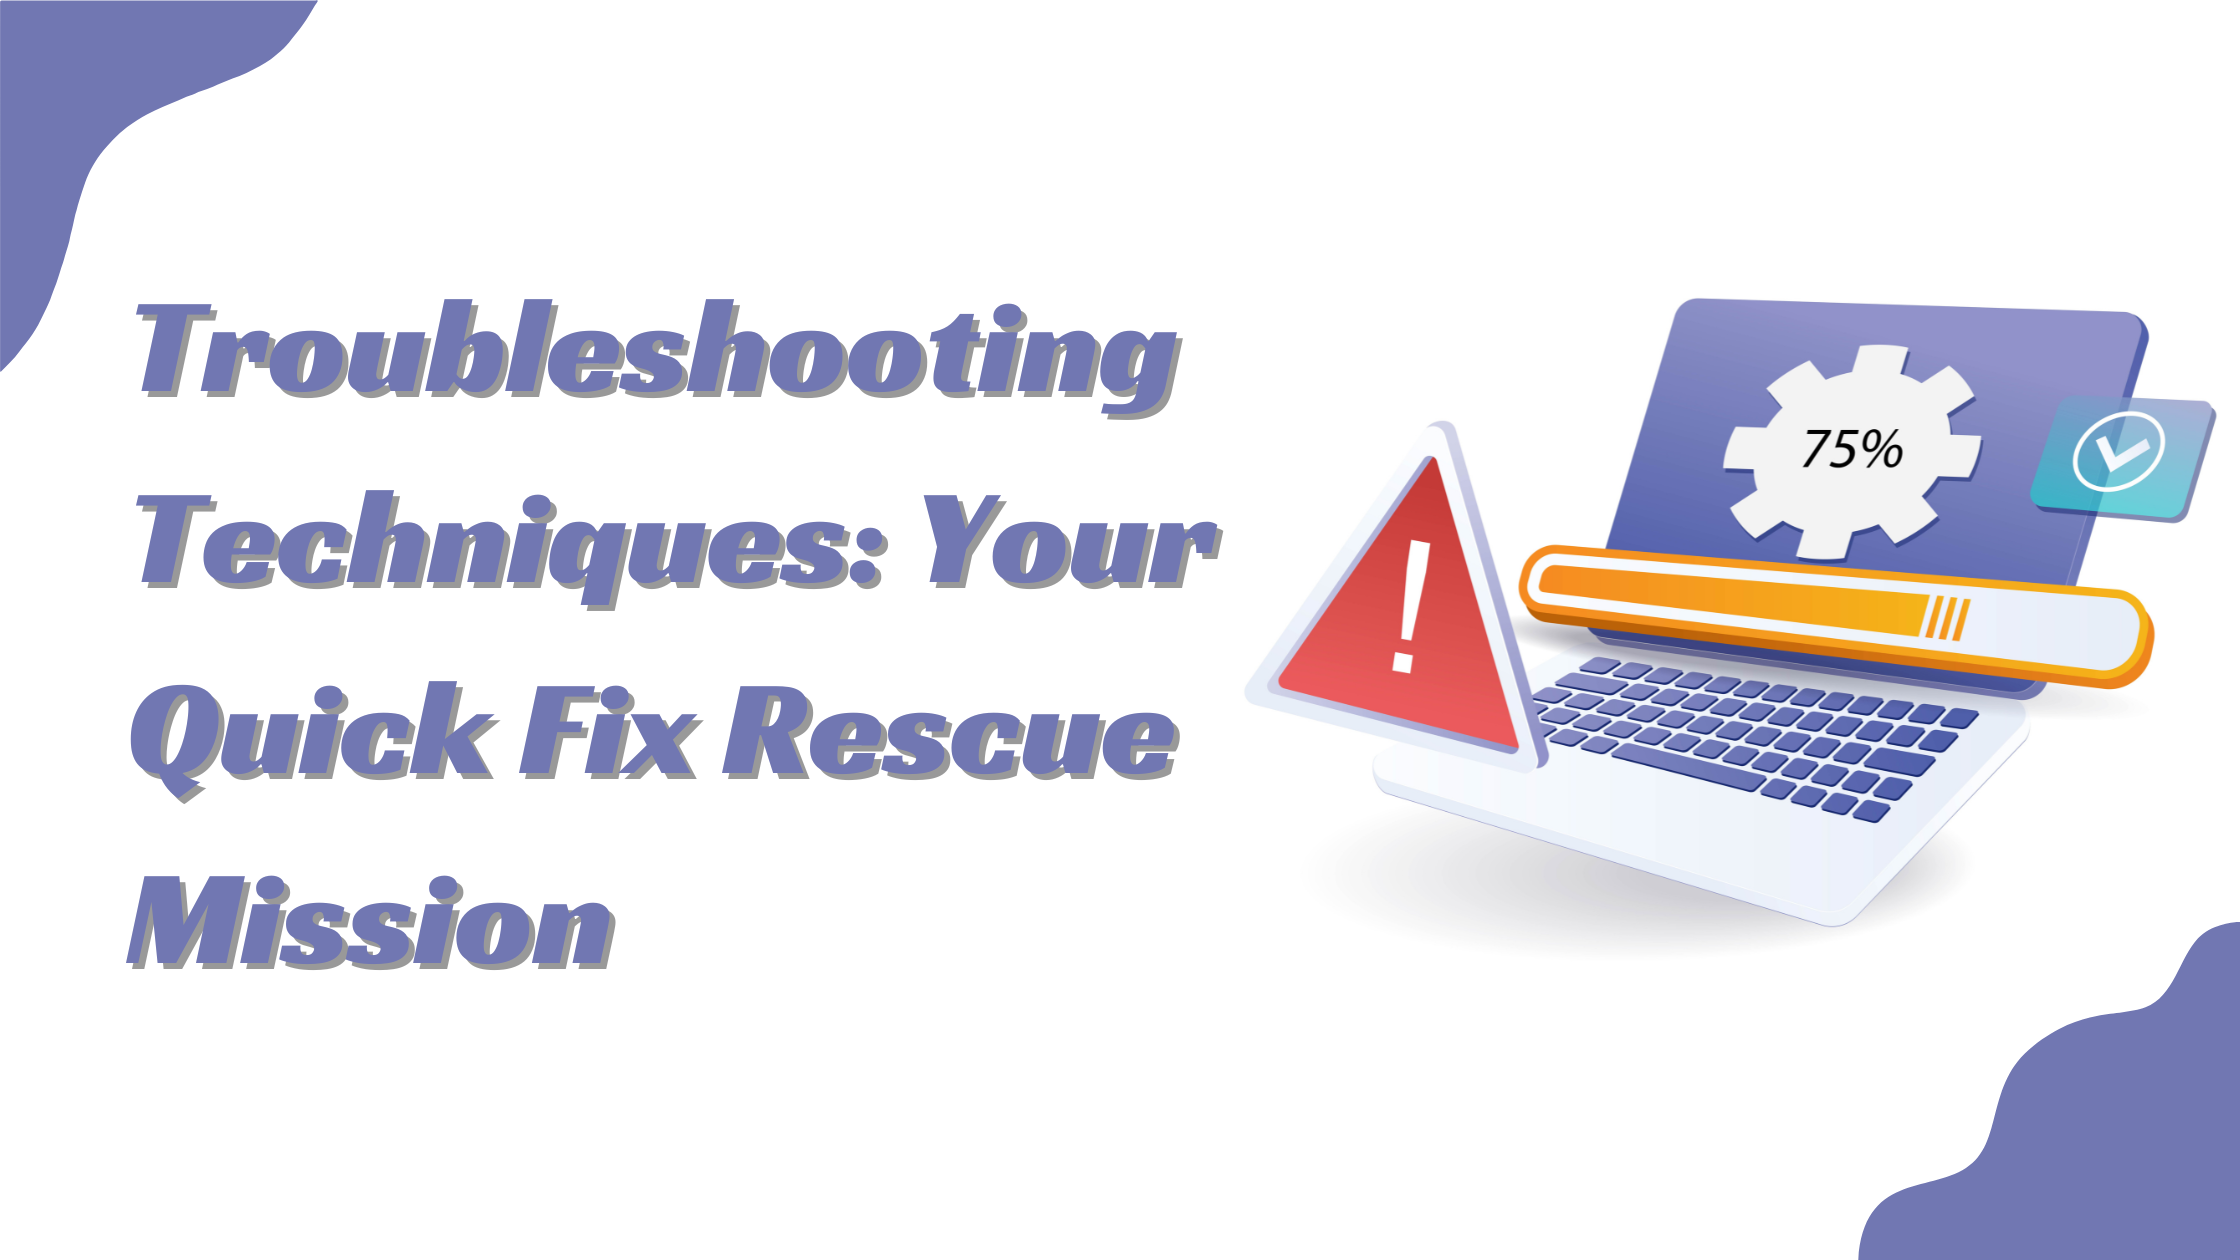 Troubleshooting Techniques: Your Quick Fix Rescue Mission